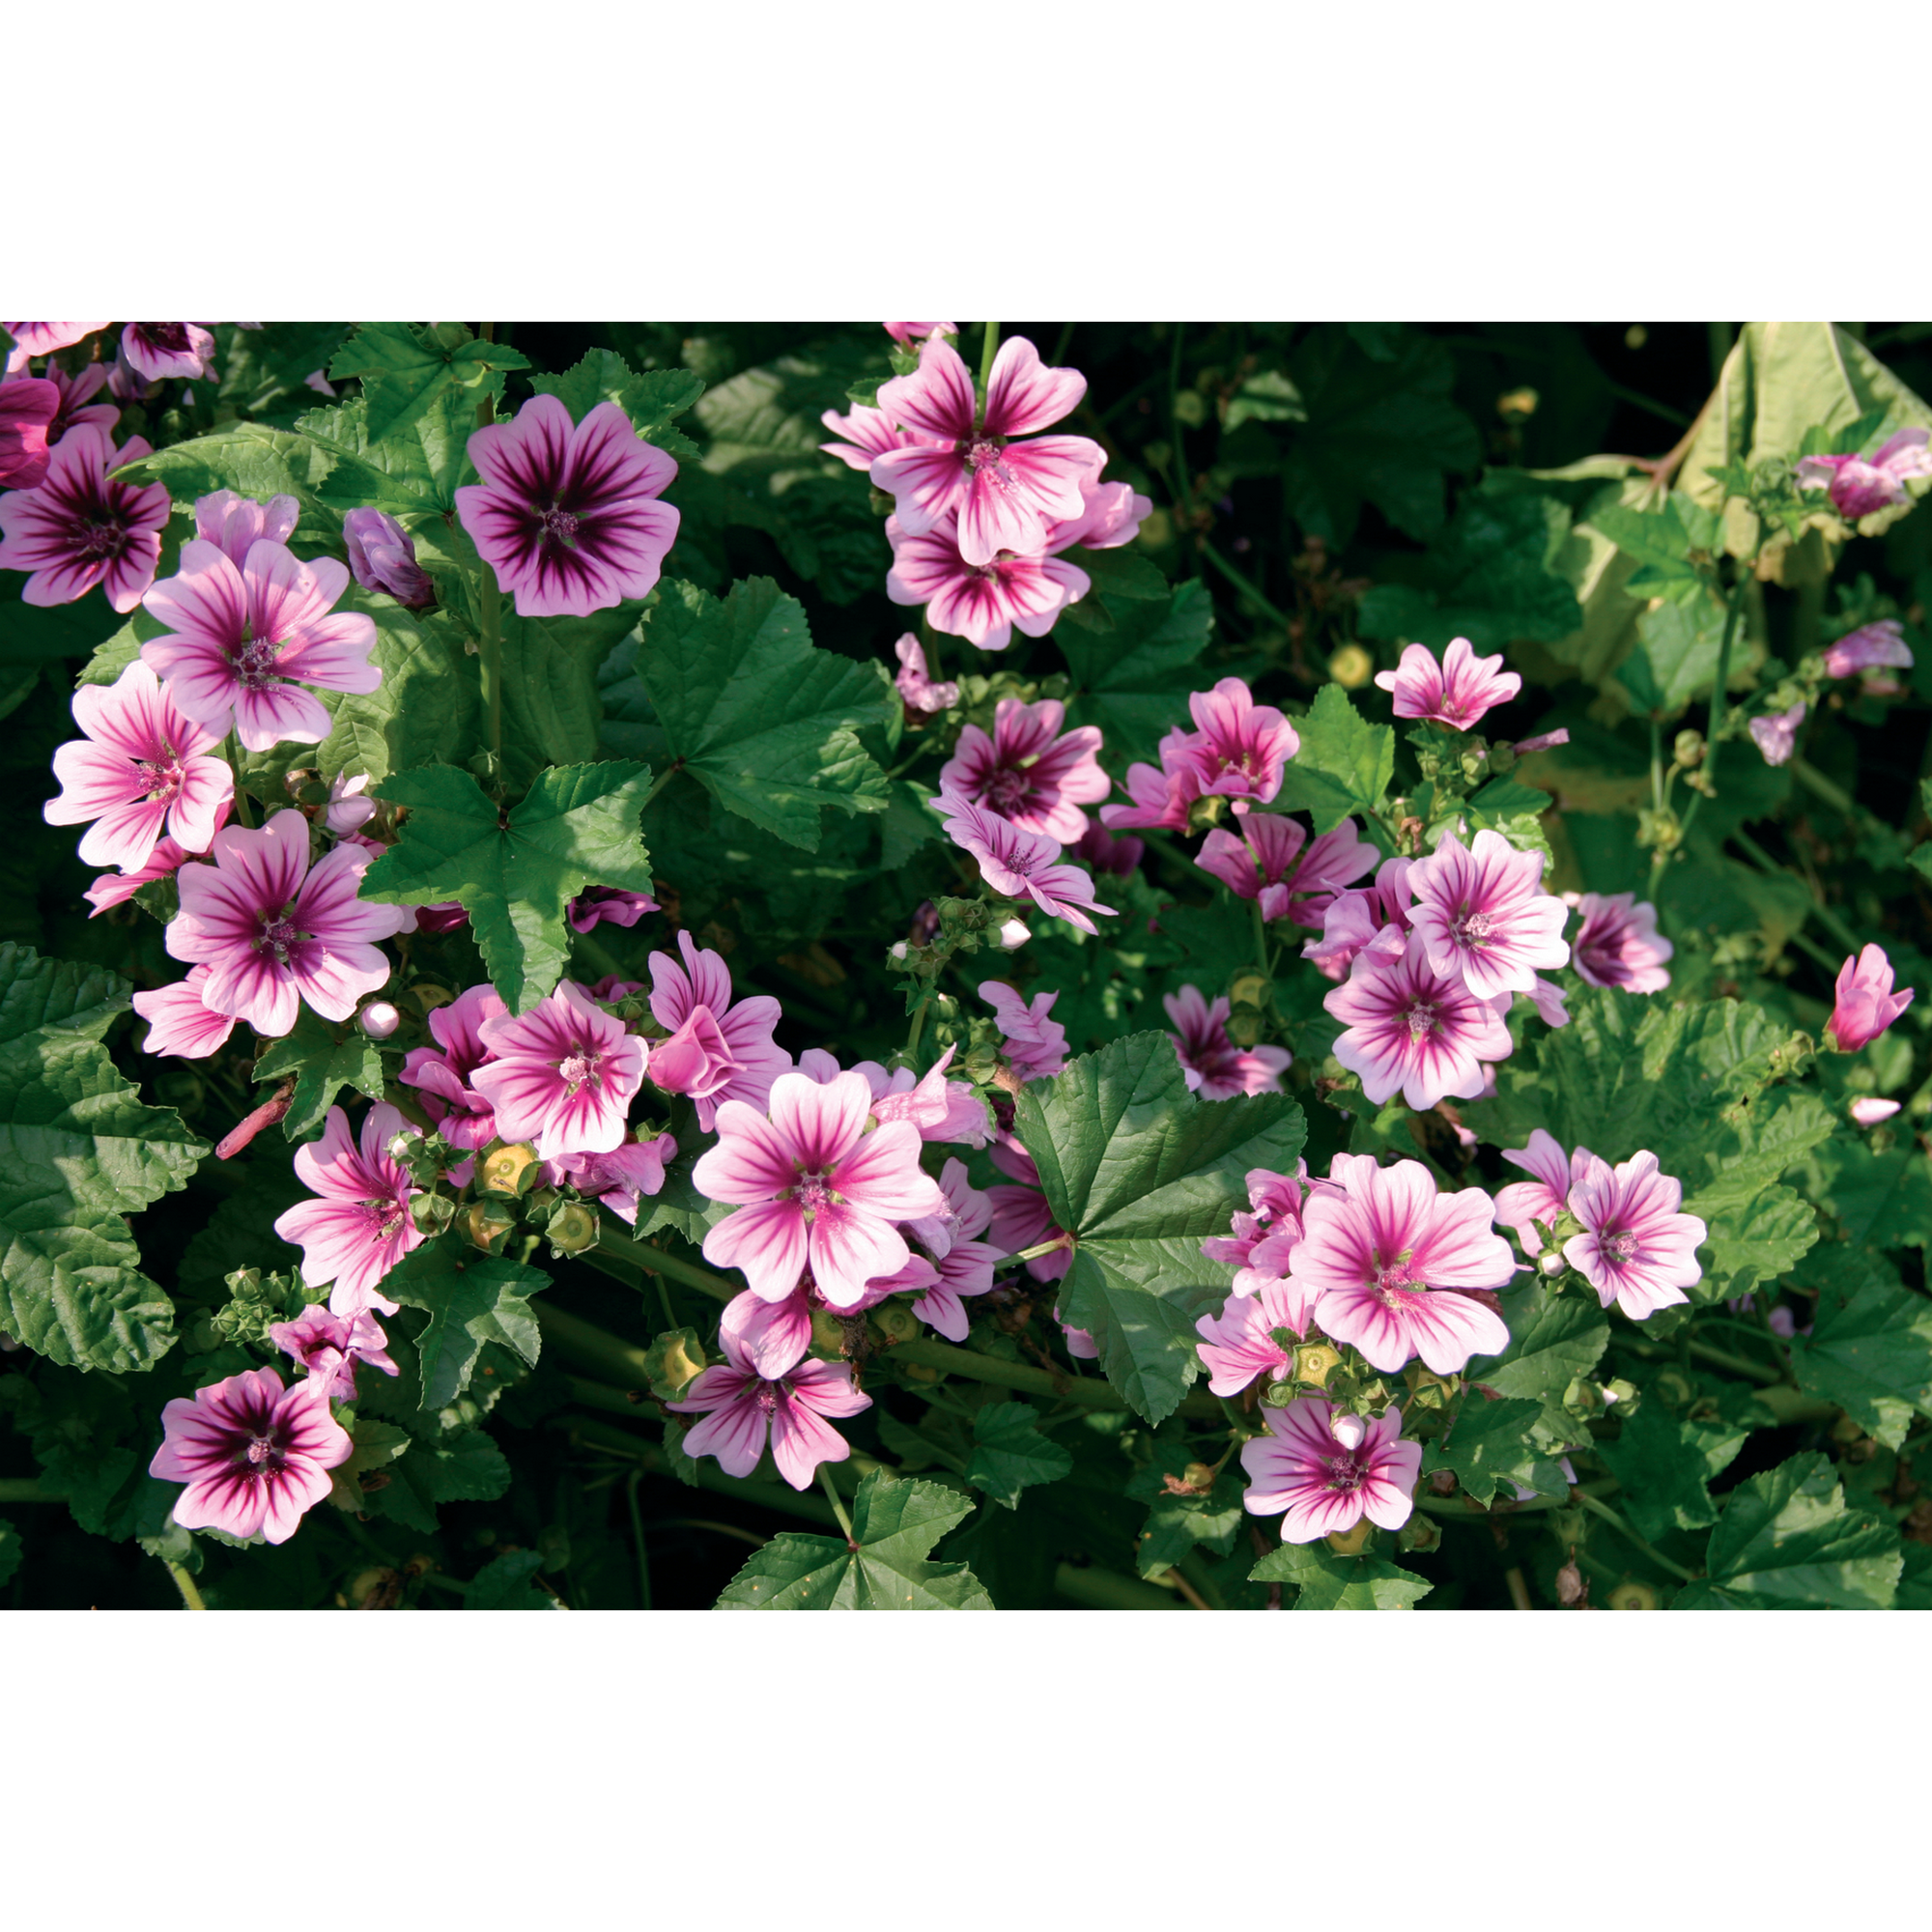 Malve 'Zebrina' weiß, violett 15 cm Topf + product picture